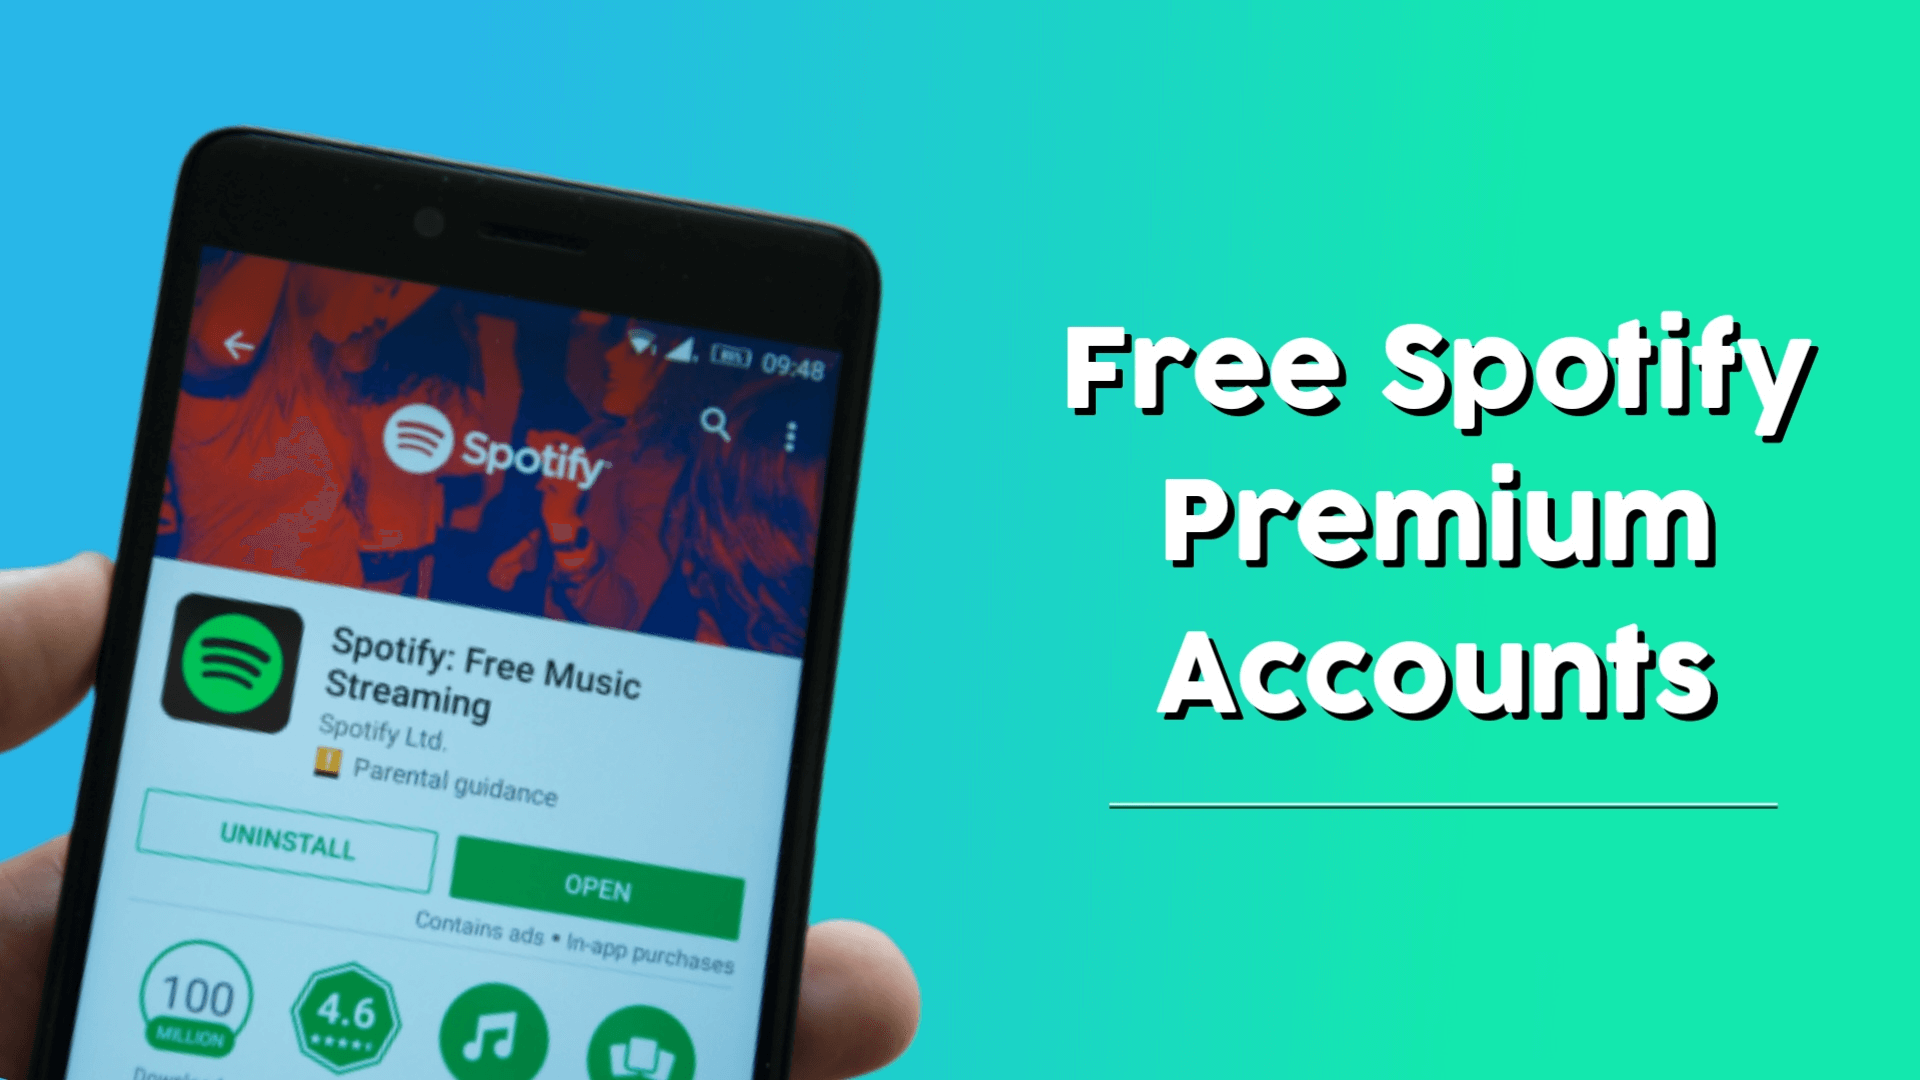 Free spotify premium account august 2018 deals